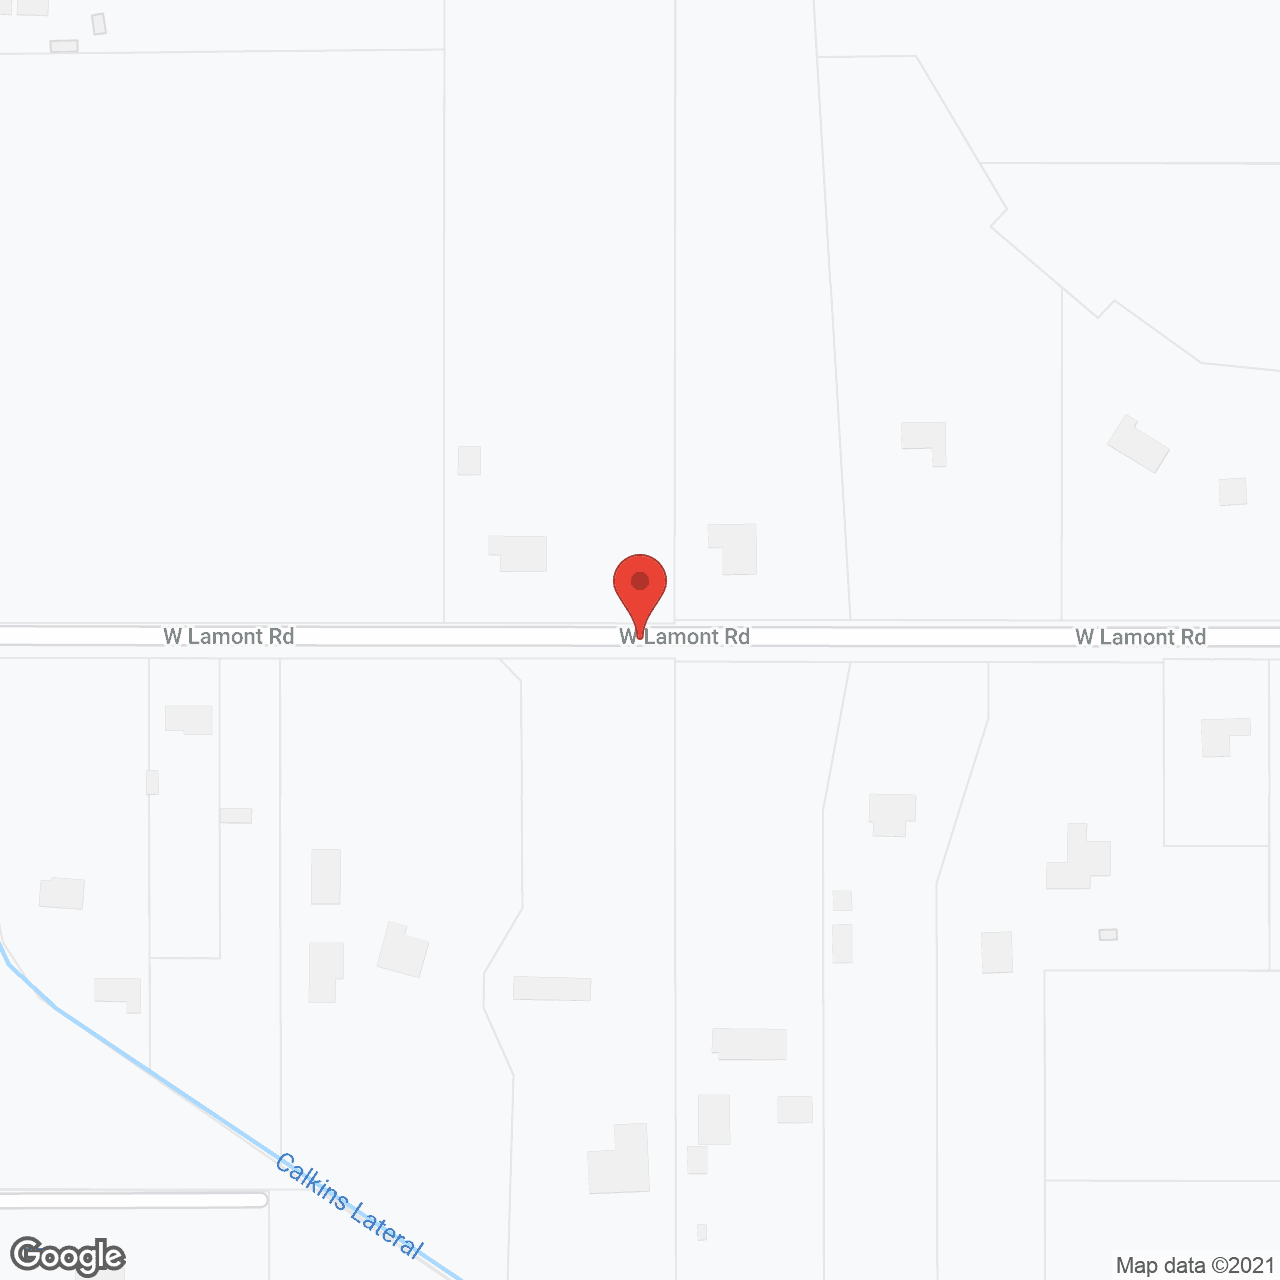 Meyer Manor in google map